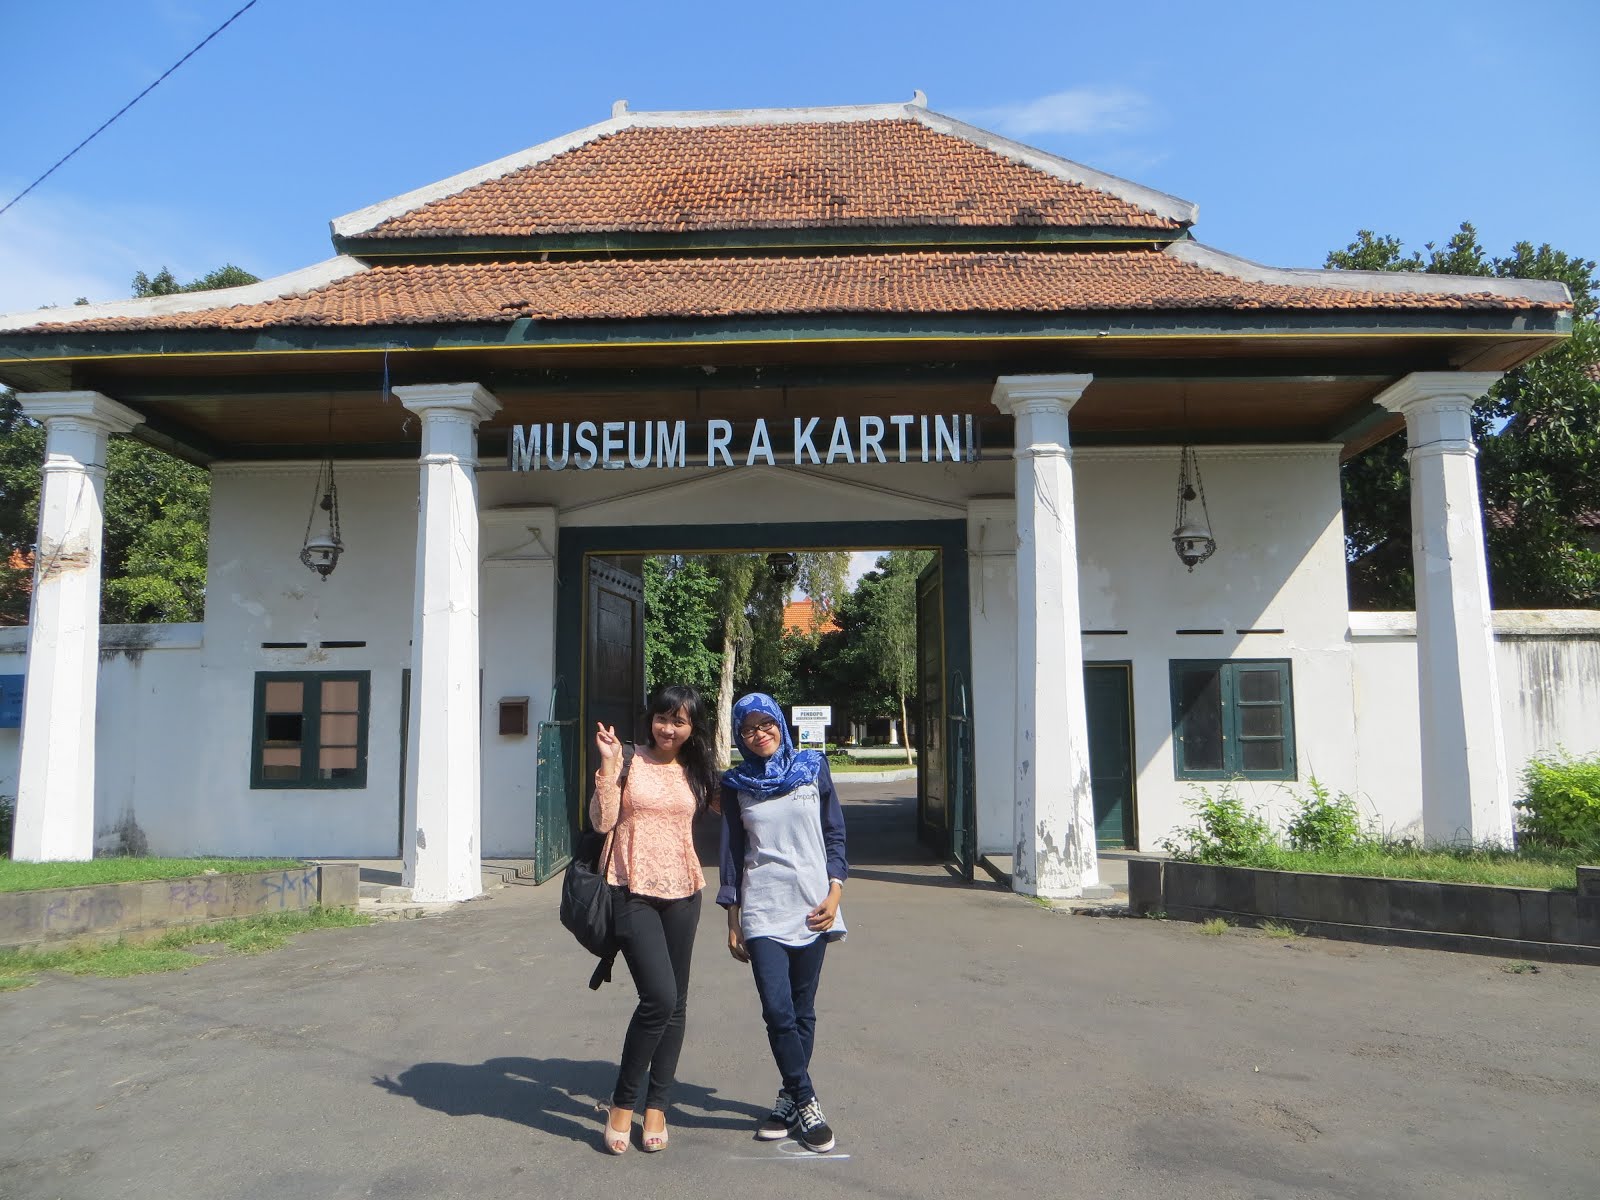 Museum Kartini, Rembang